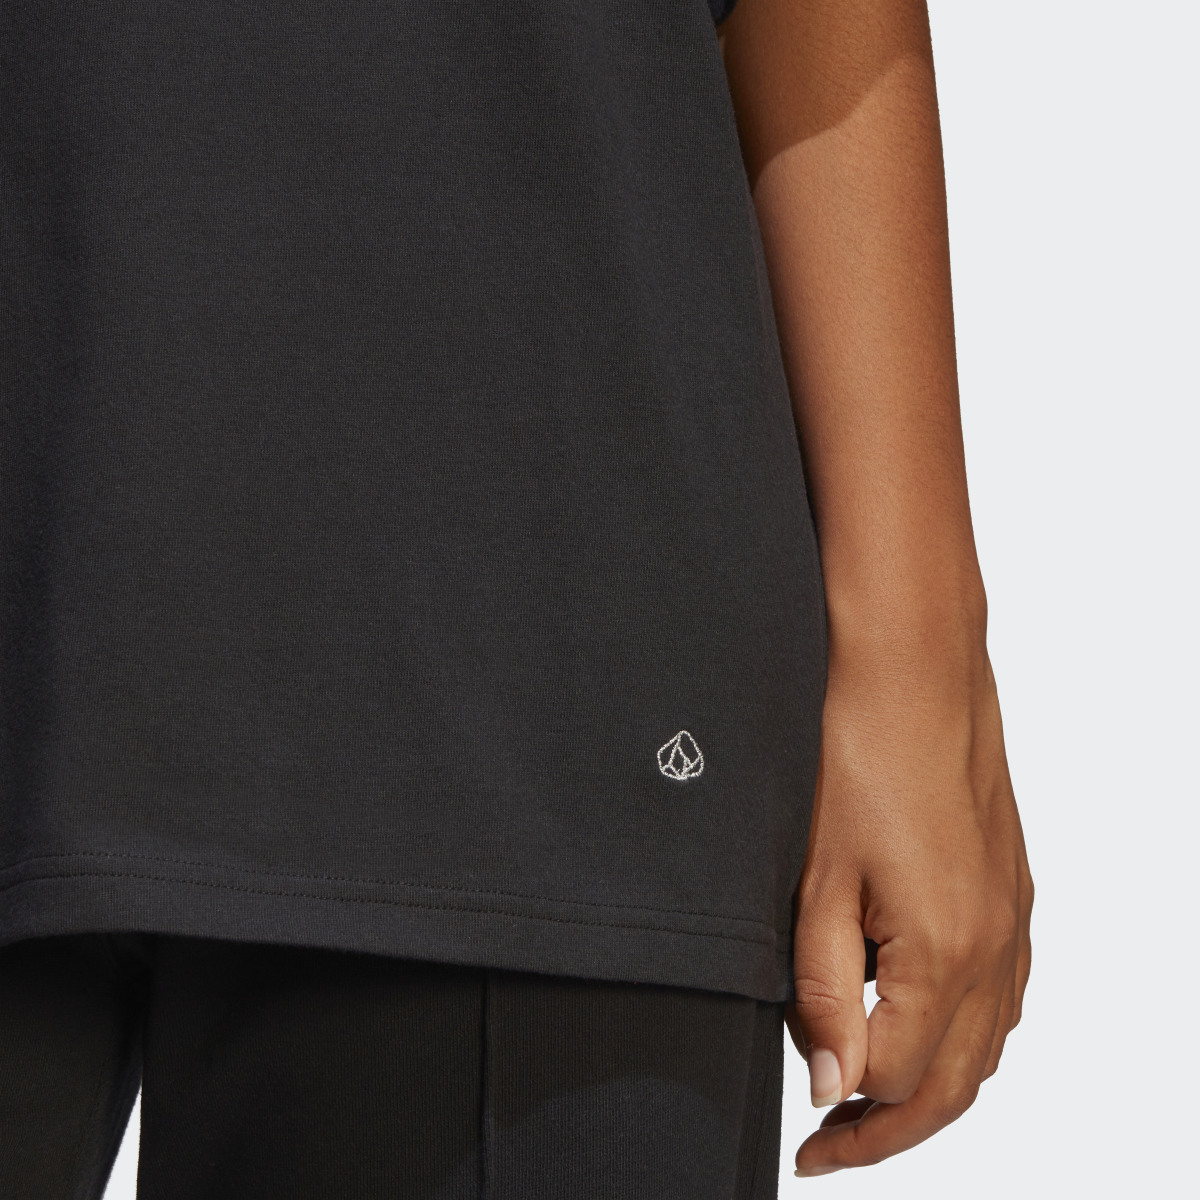 Adidas Camiseta Boyfriend Healing Crystals Inspired Graphics. 9